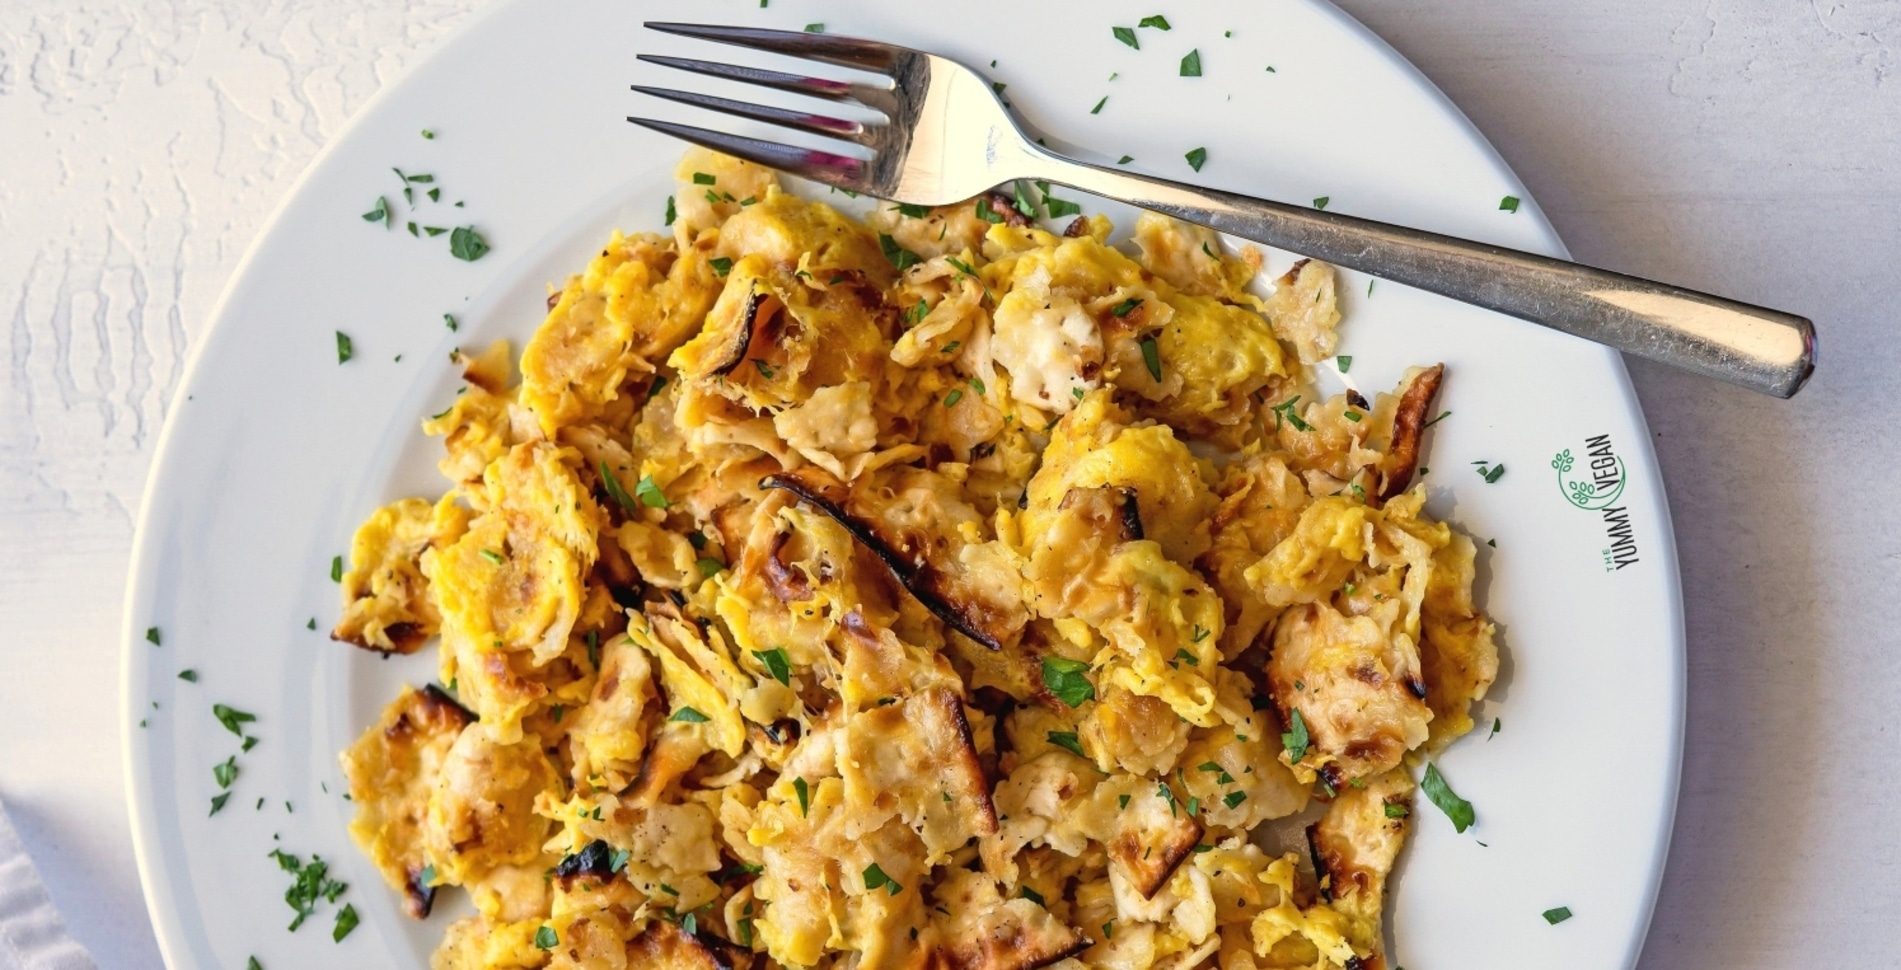 12 Plant-Based Passover Recipes From Matzo Lasagna to Potato Kugel